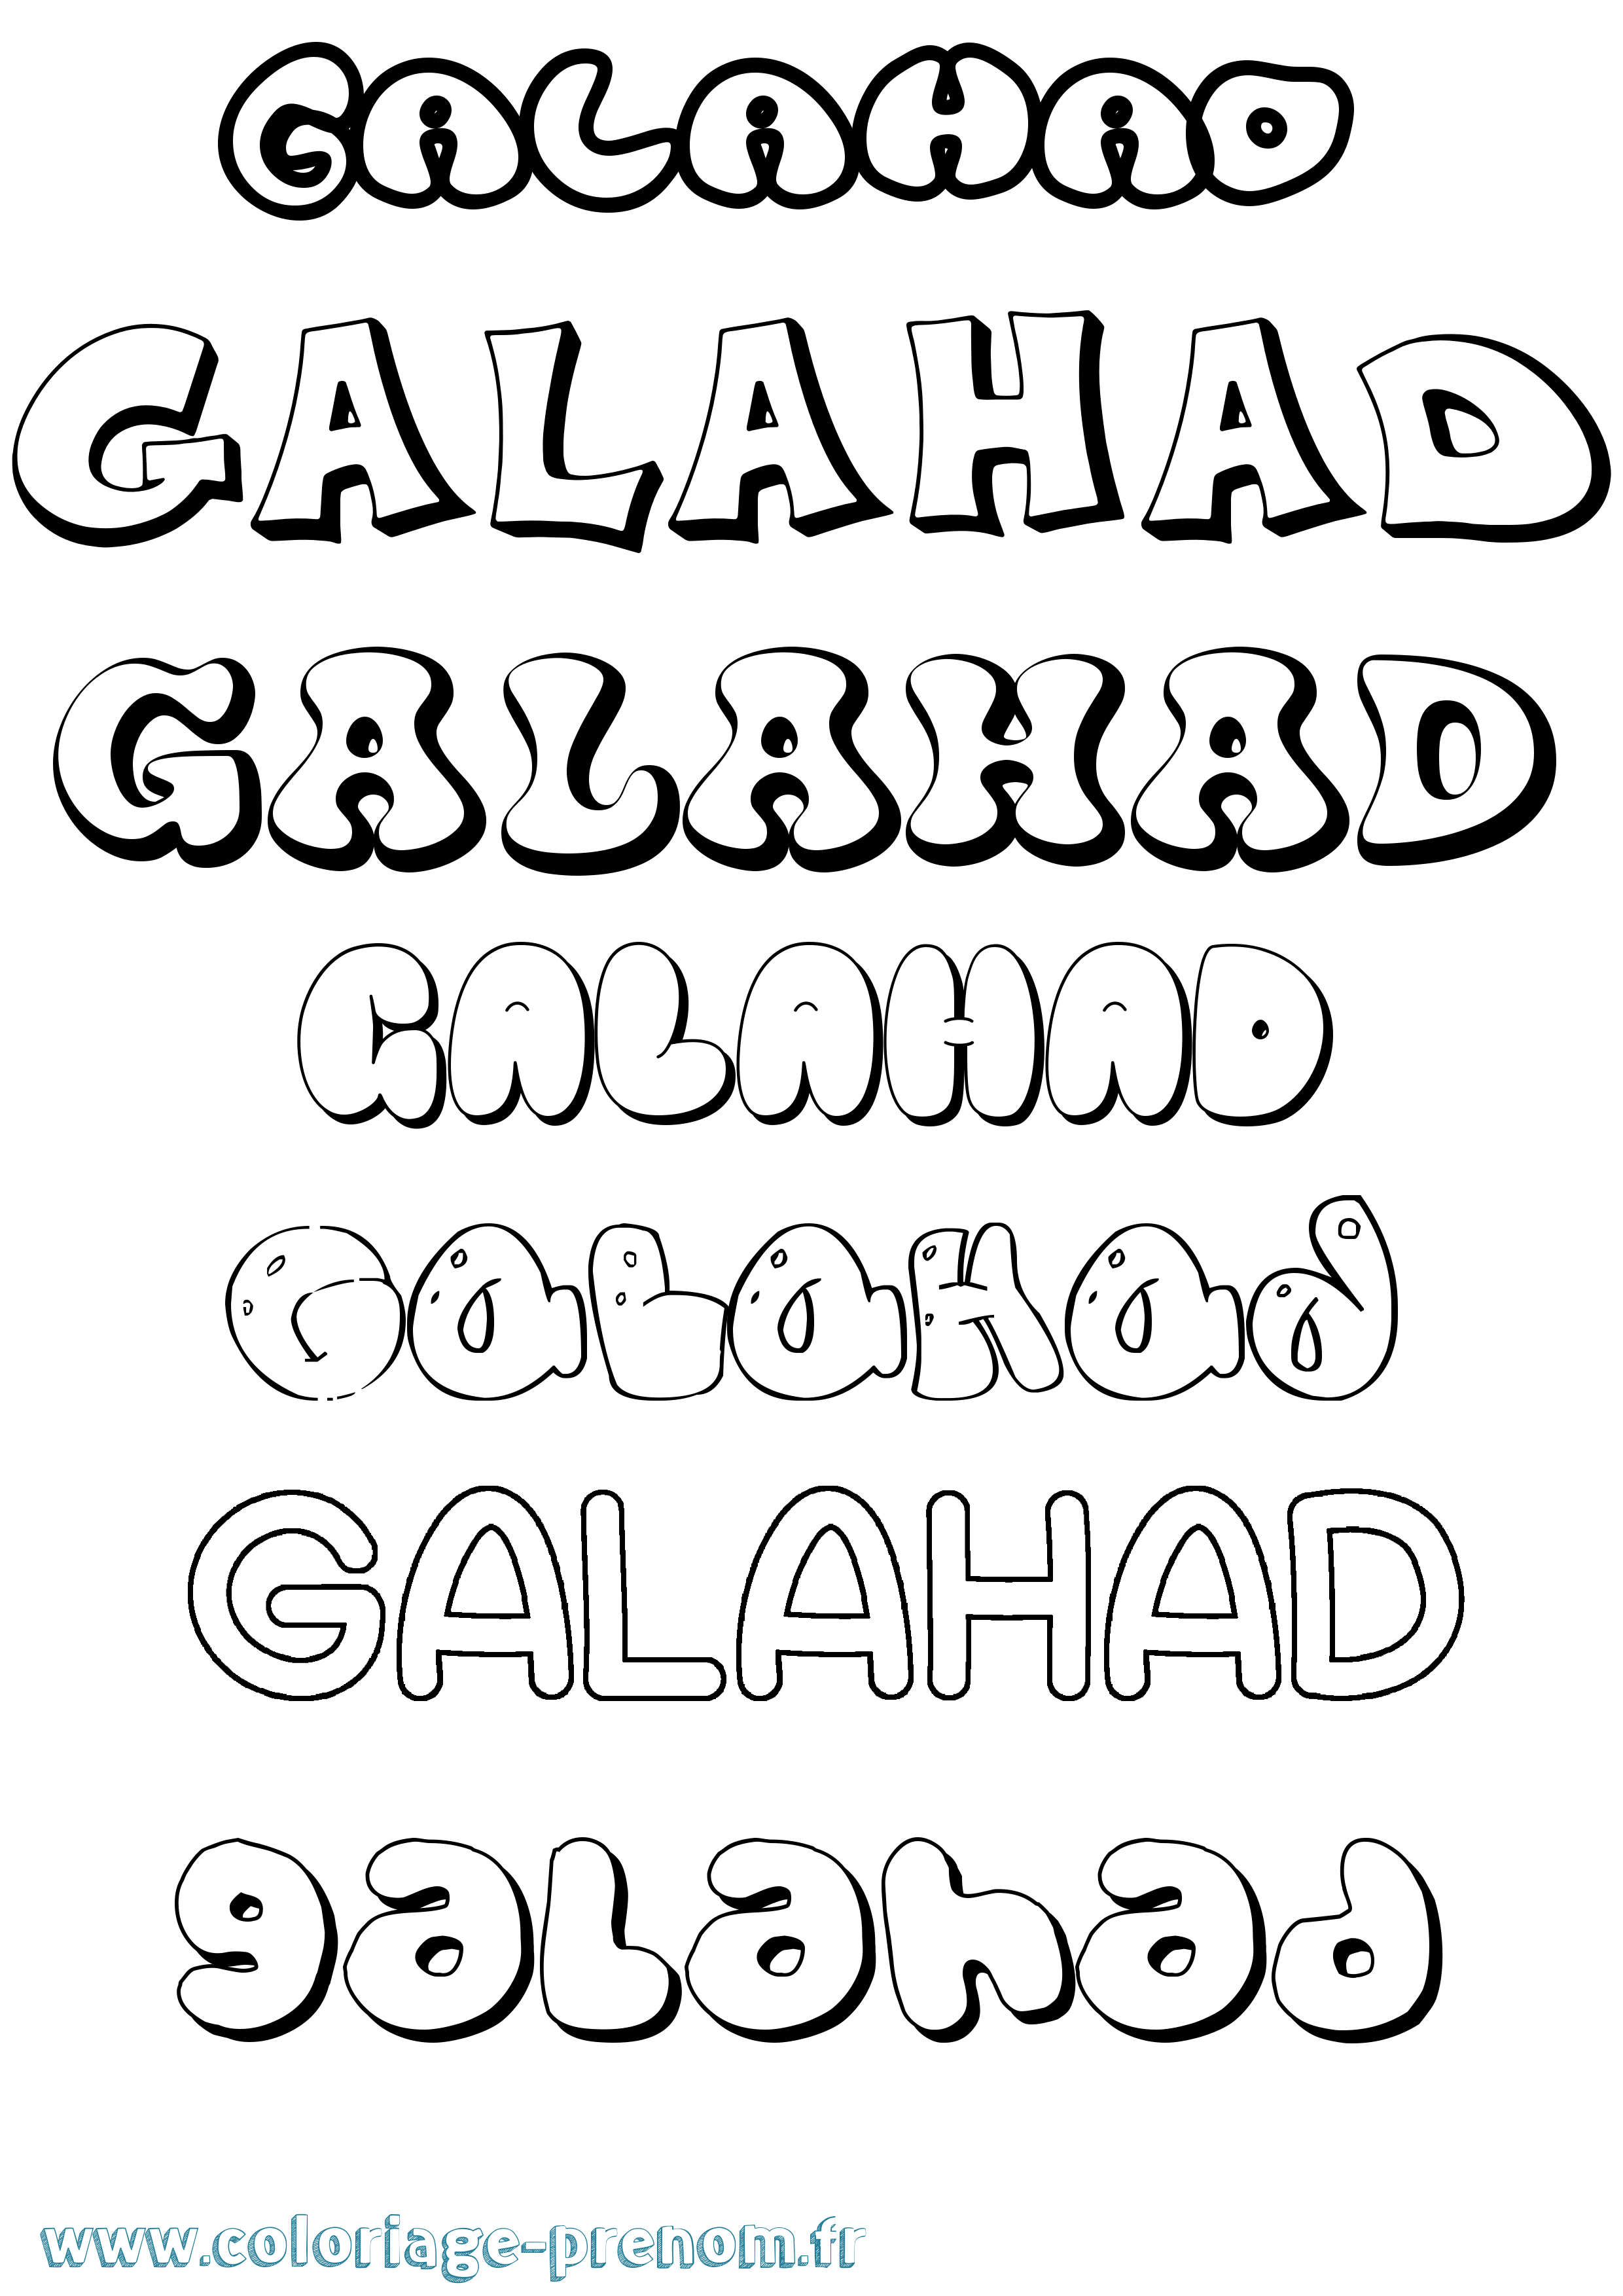 Coloriage prénom Galahad Bubble